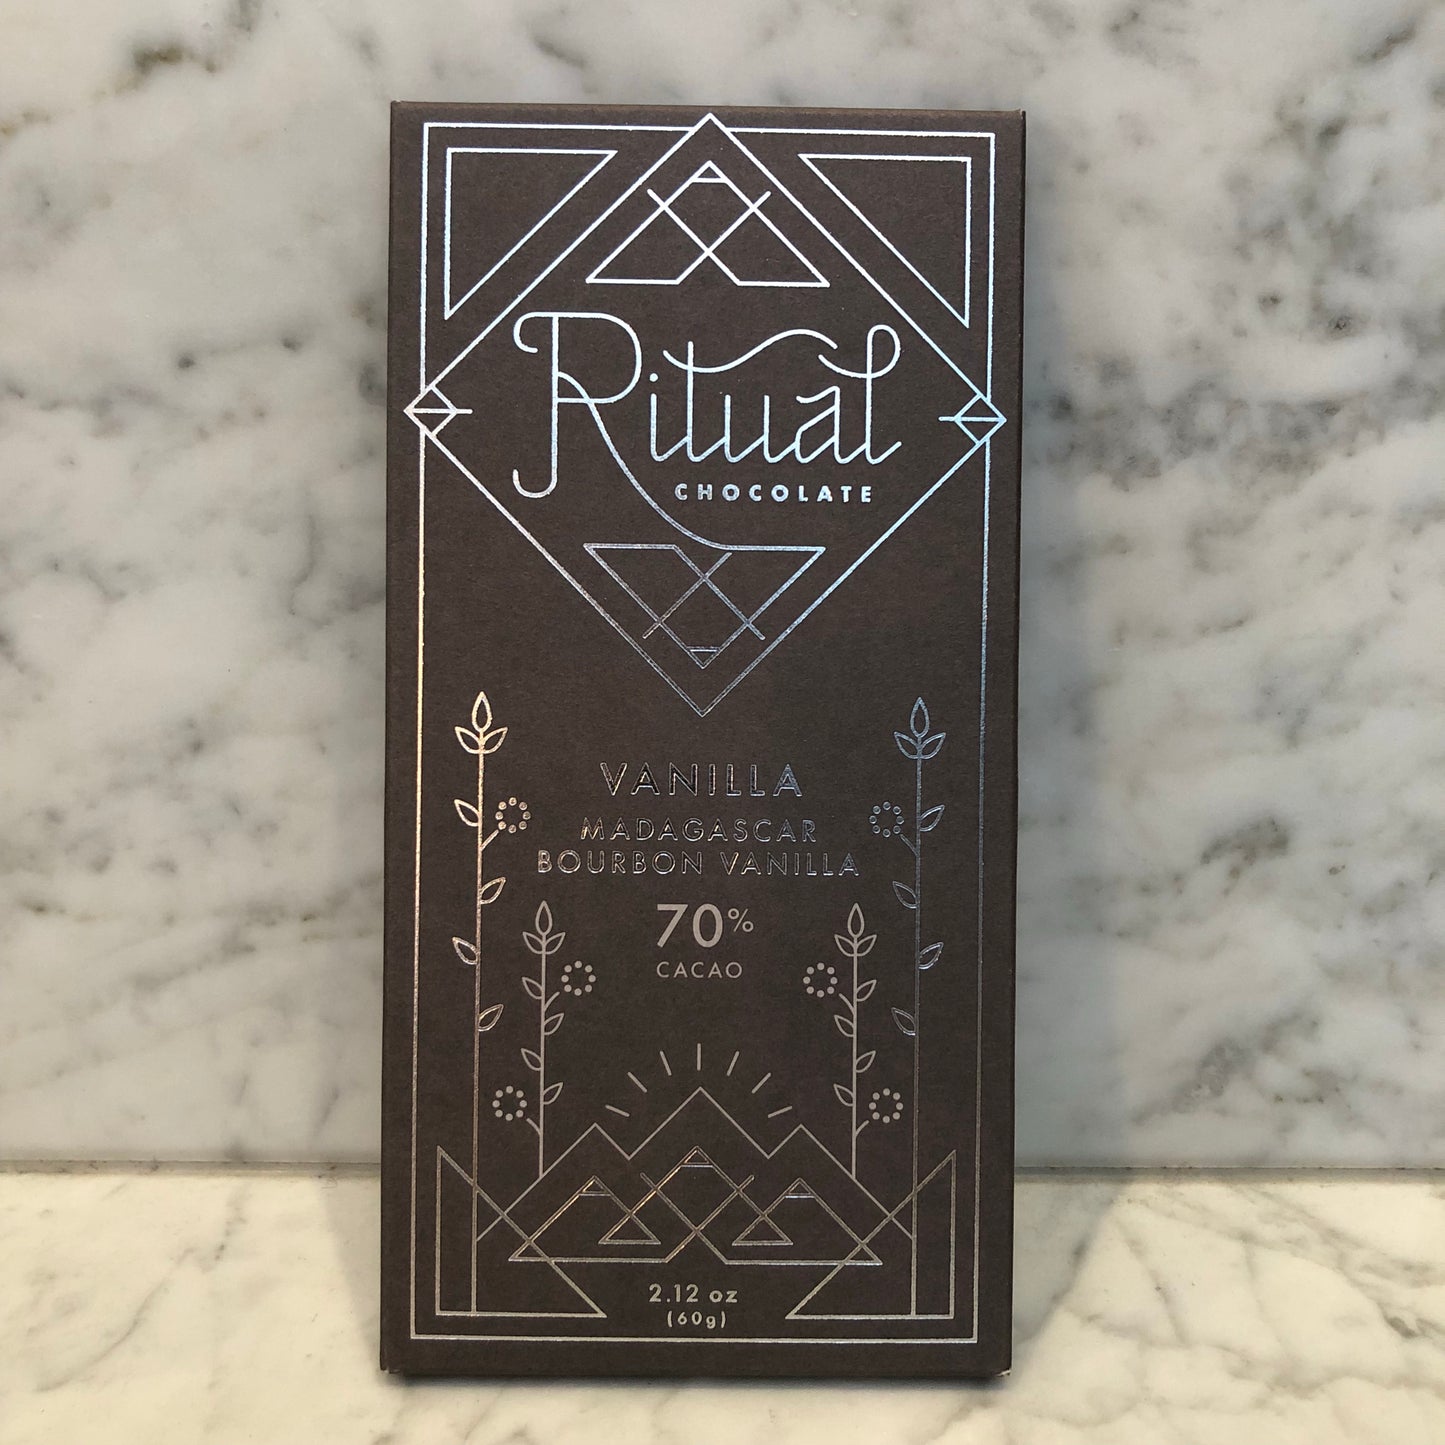 Ritual - Madagascar Bourbon Vanilla 70%